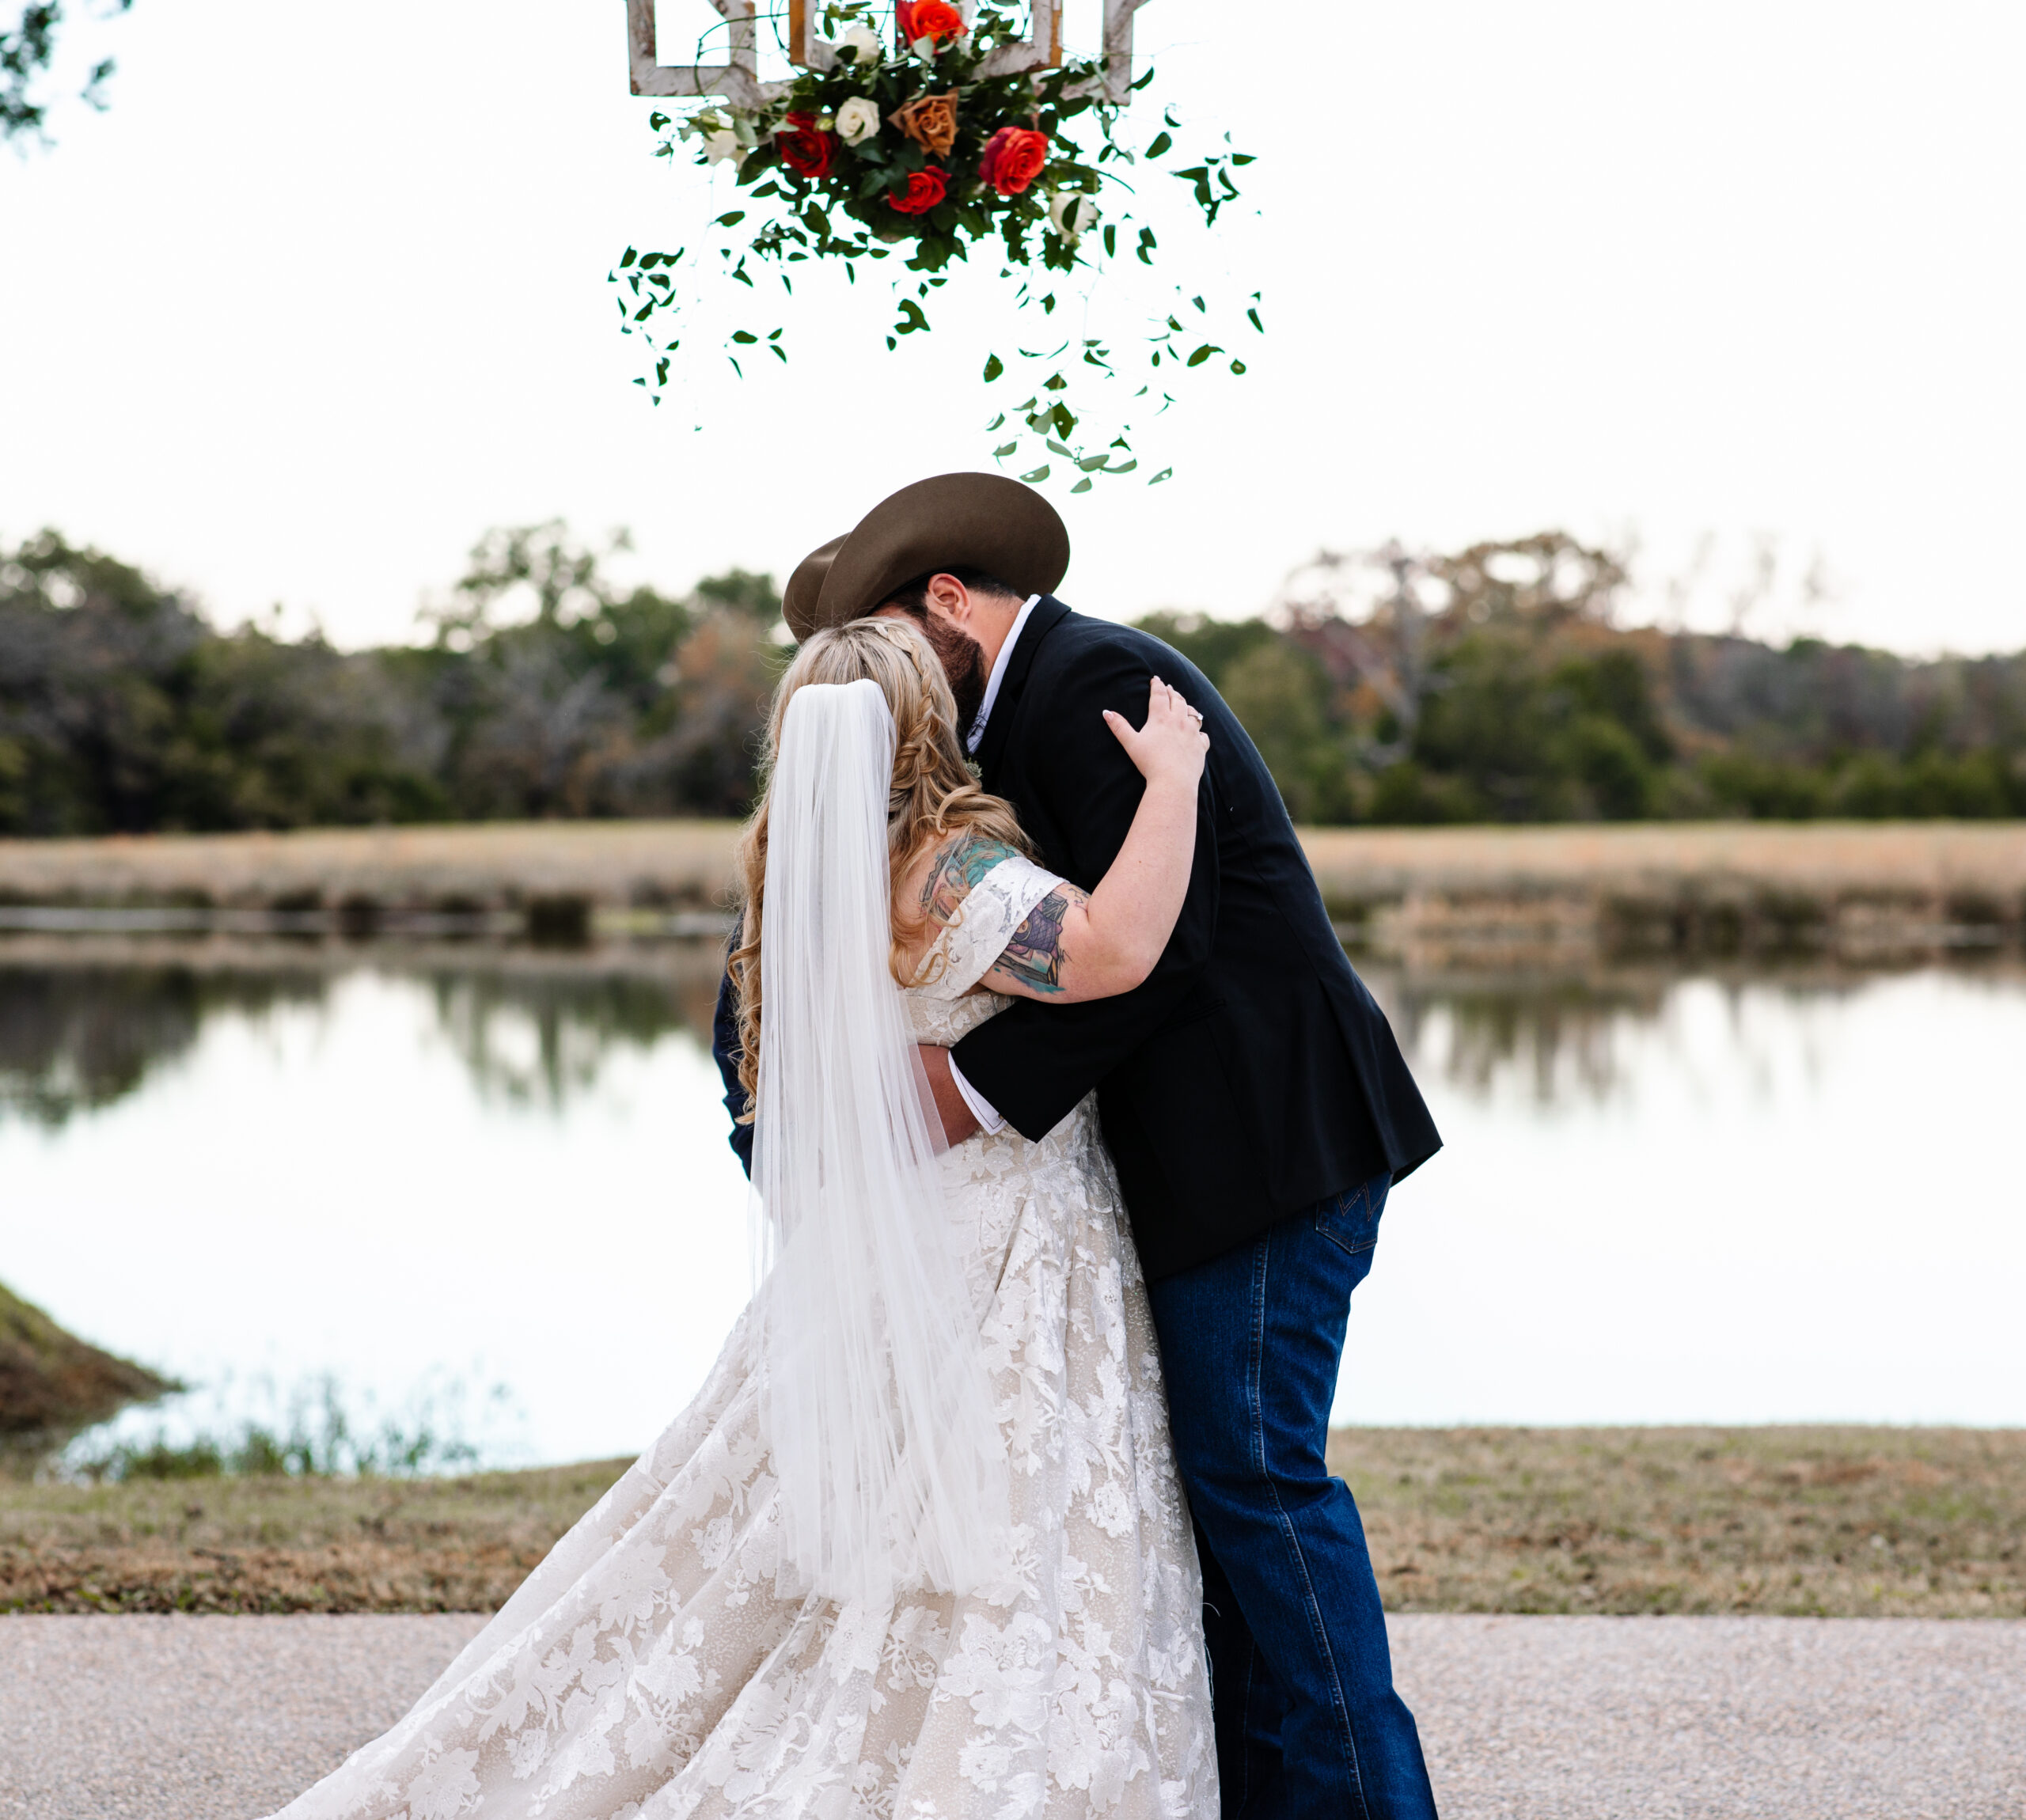 DFW wedding photographer, East Texas wedding photographer, DFW wedding photography packages, The Wildflower Event Venue, DFW wedding venues, first kiss